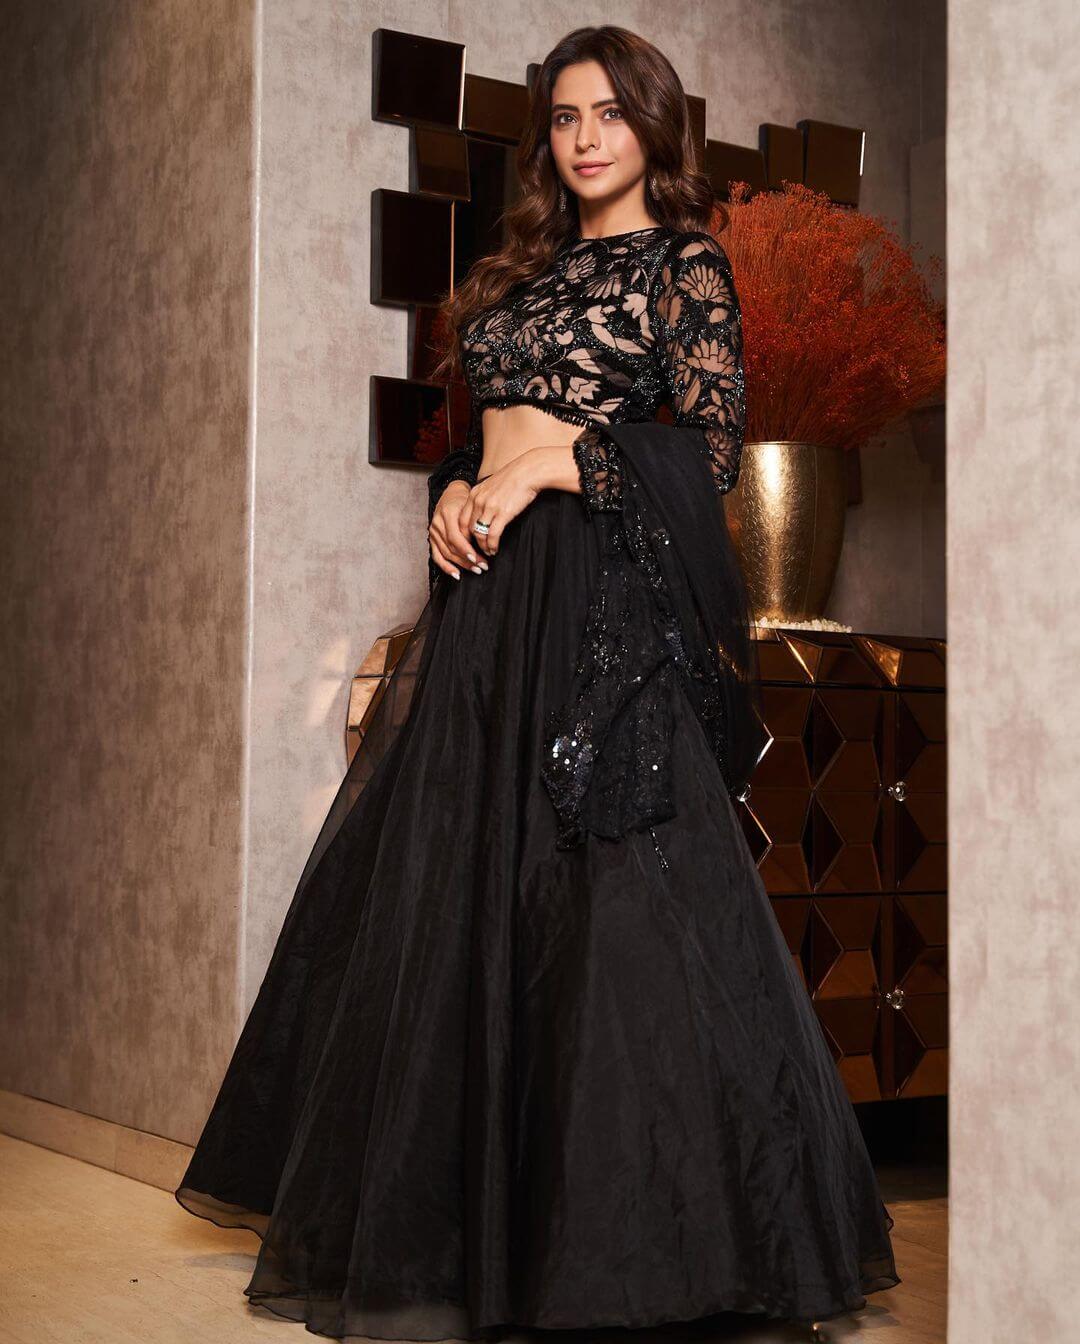 Aamna Sharif Look Dazzling in Black Lehenga Outfit